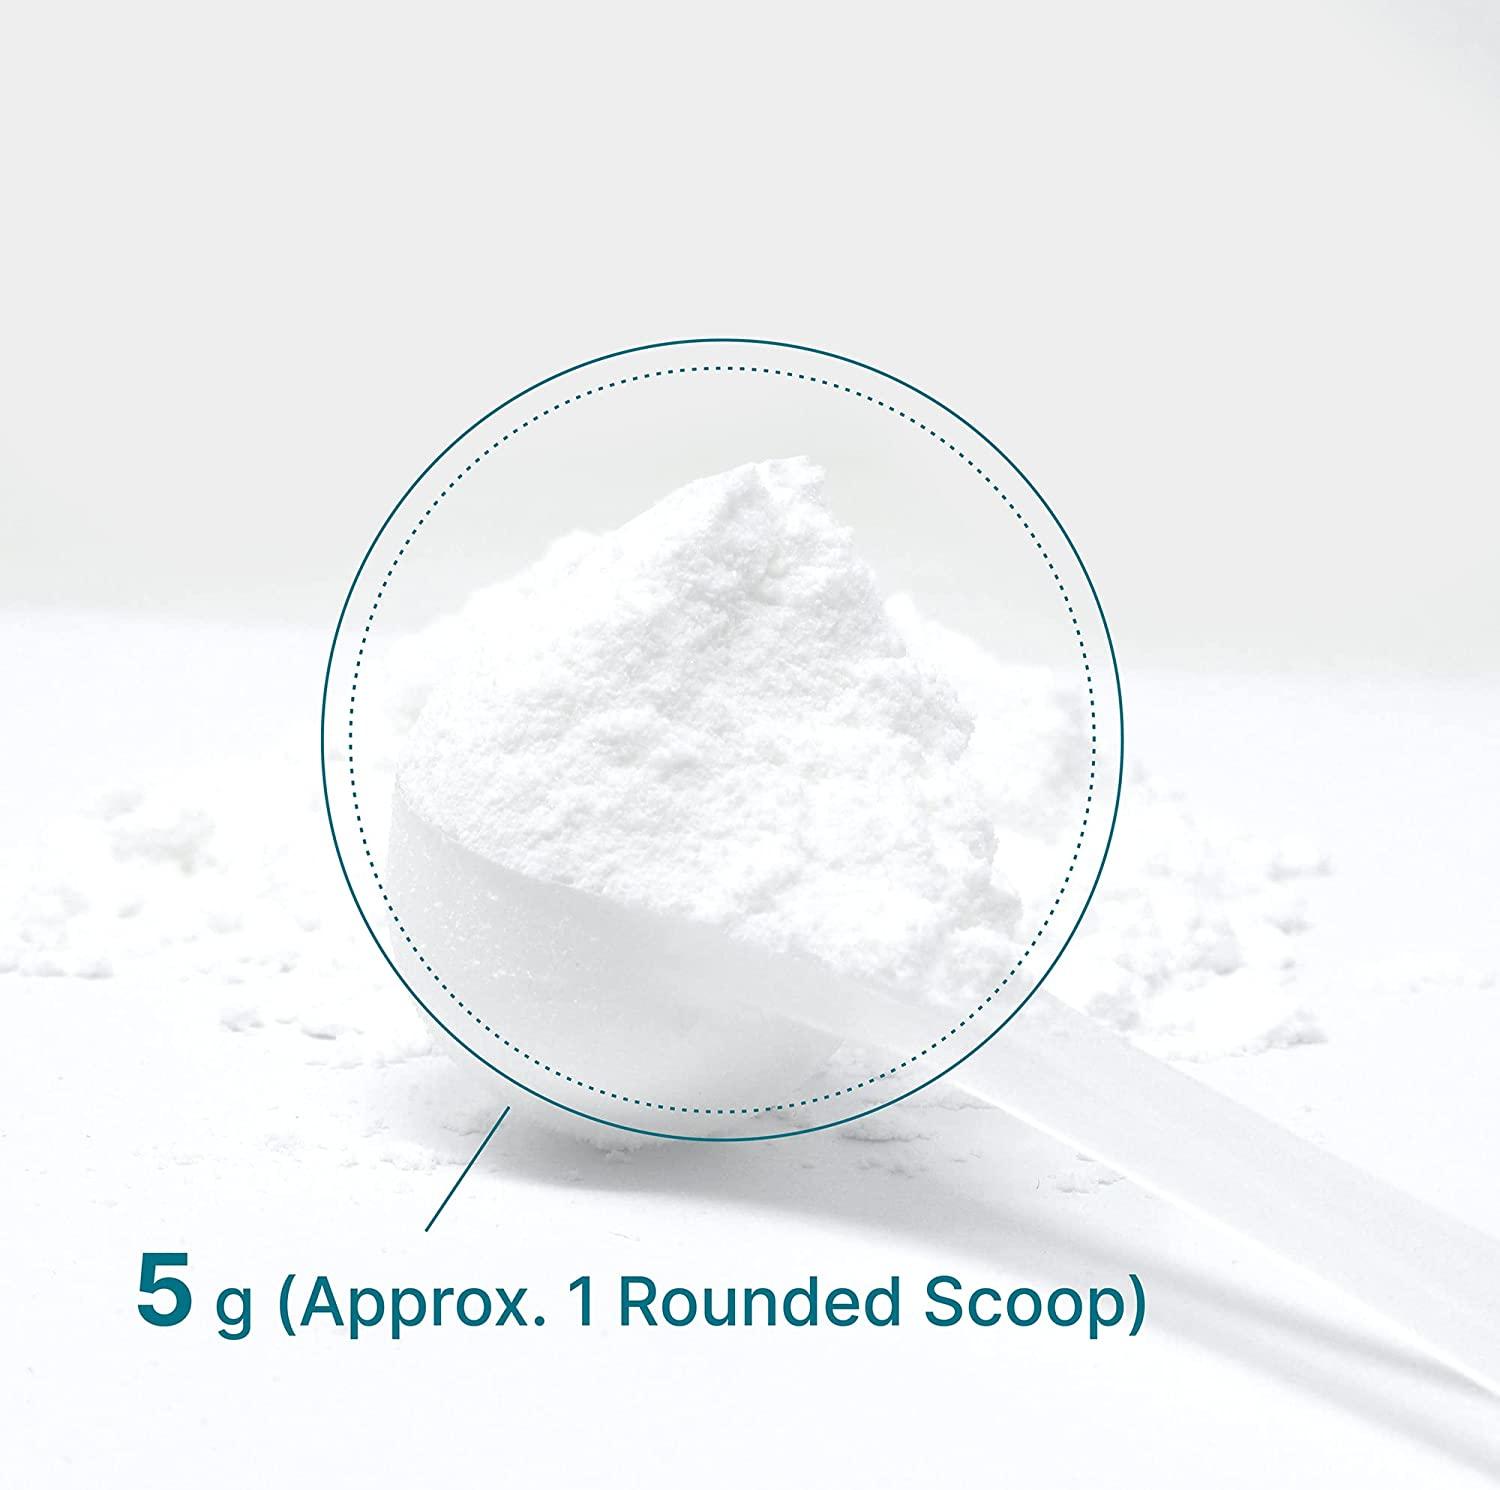 Creatine Monohydrate Powder 300 Grams (10.6oz), Unflavored, Pure, Micronized Creatine Powder, 5000mg(5g) Per Serving, 2 Month Supply, Vegan